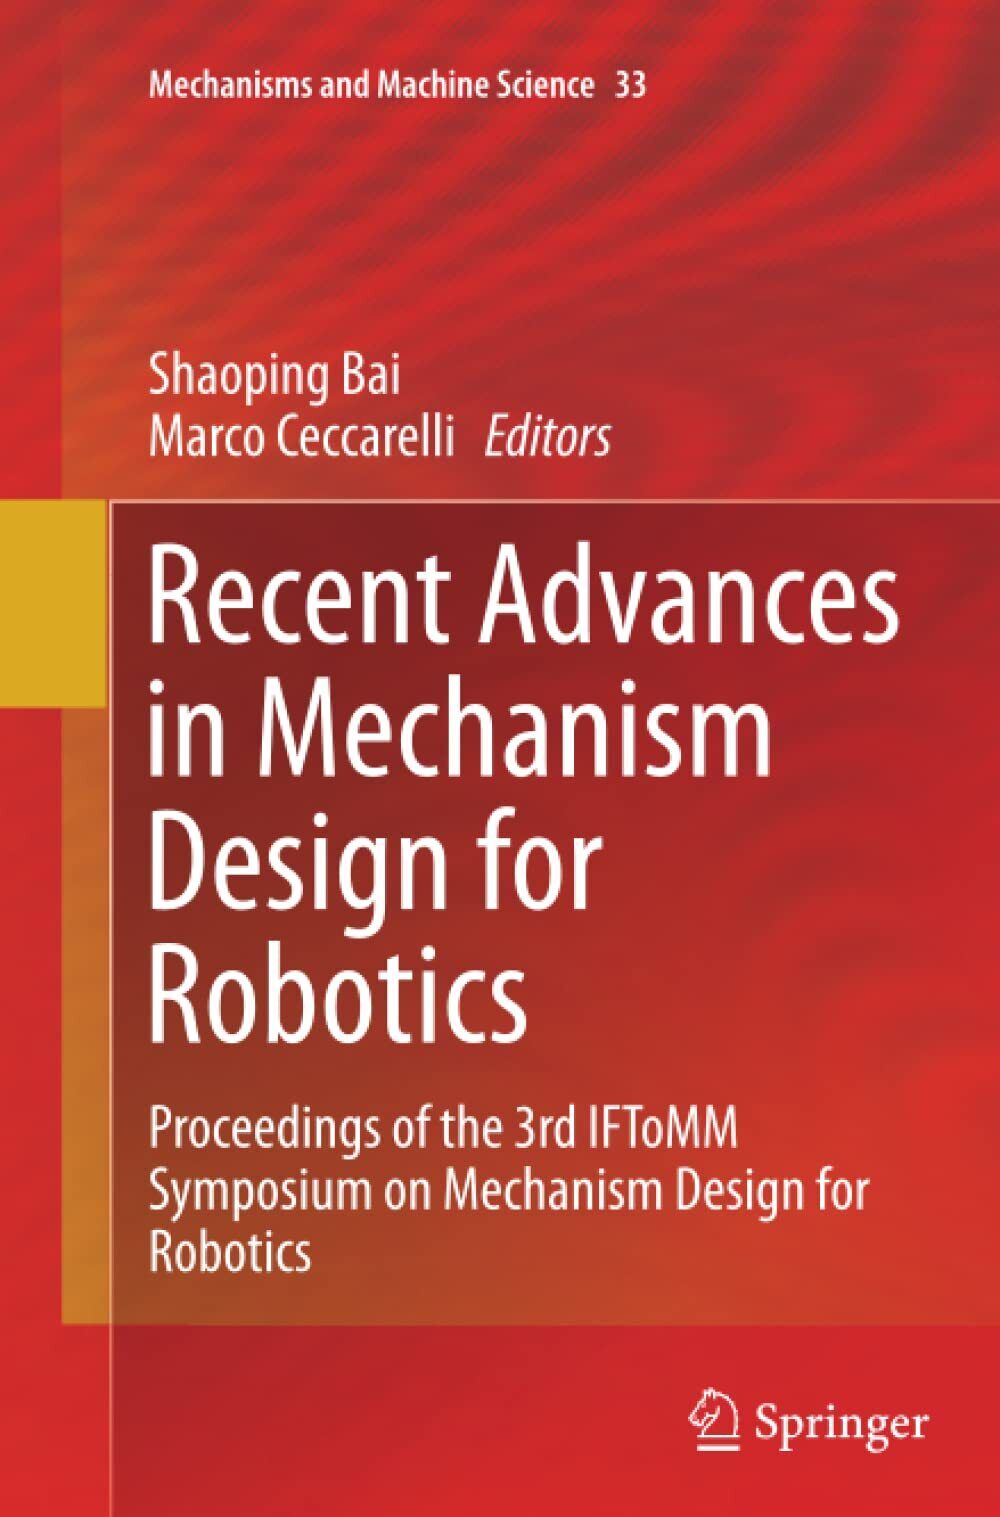 Recent Advances in Mechanism Design for Robotics - Shaoping Bai - Springer, 2016